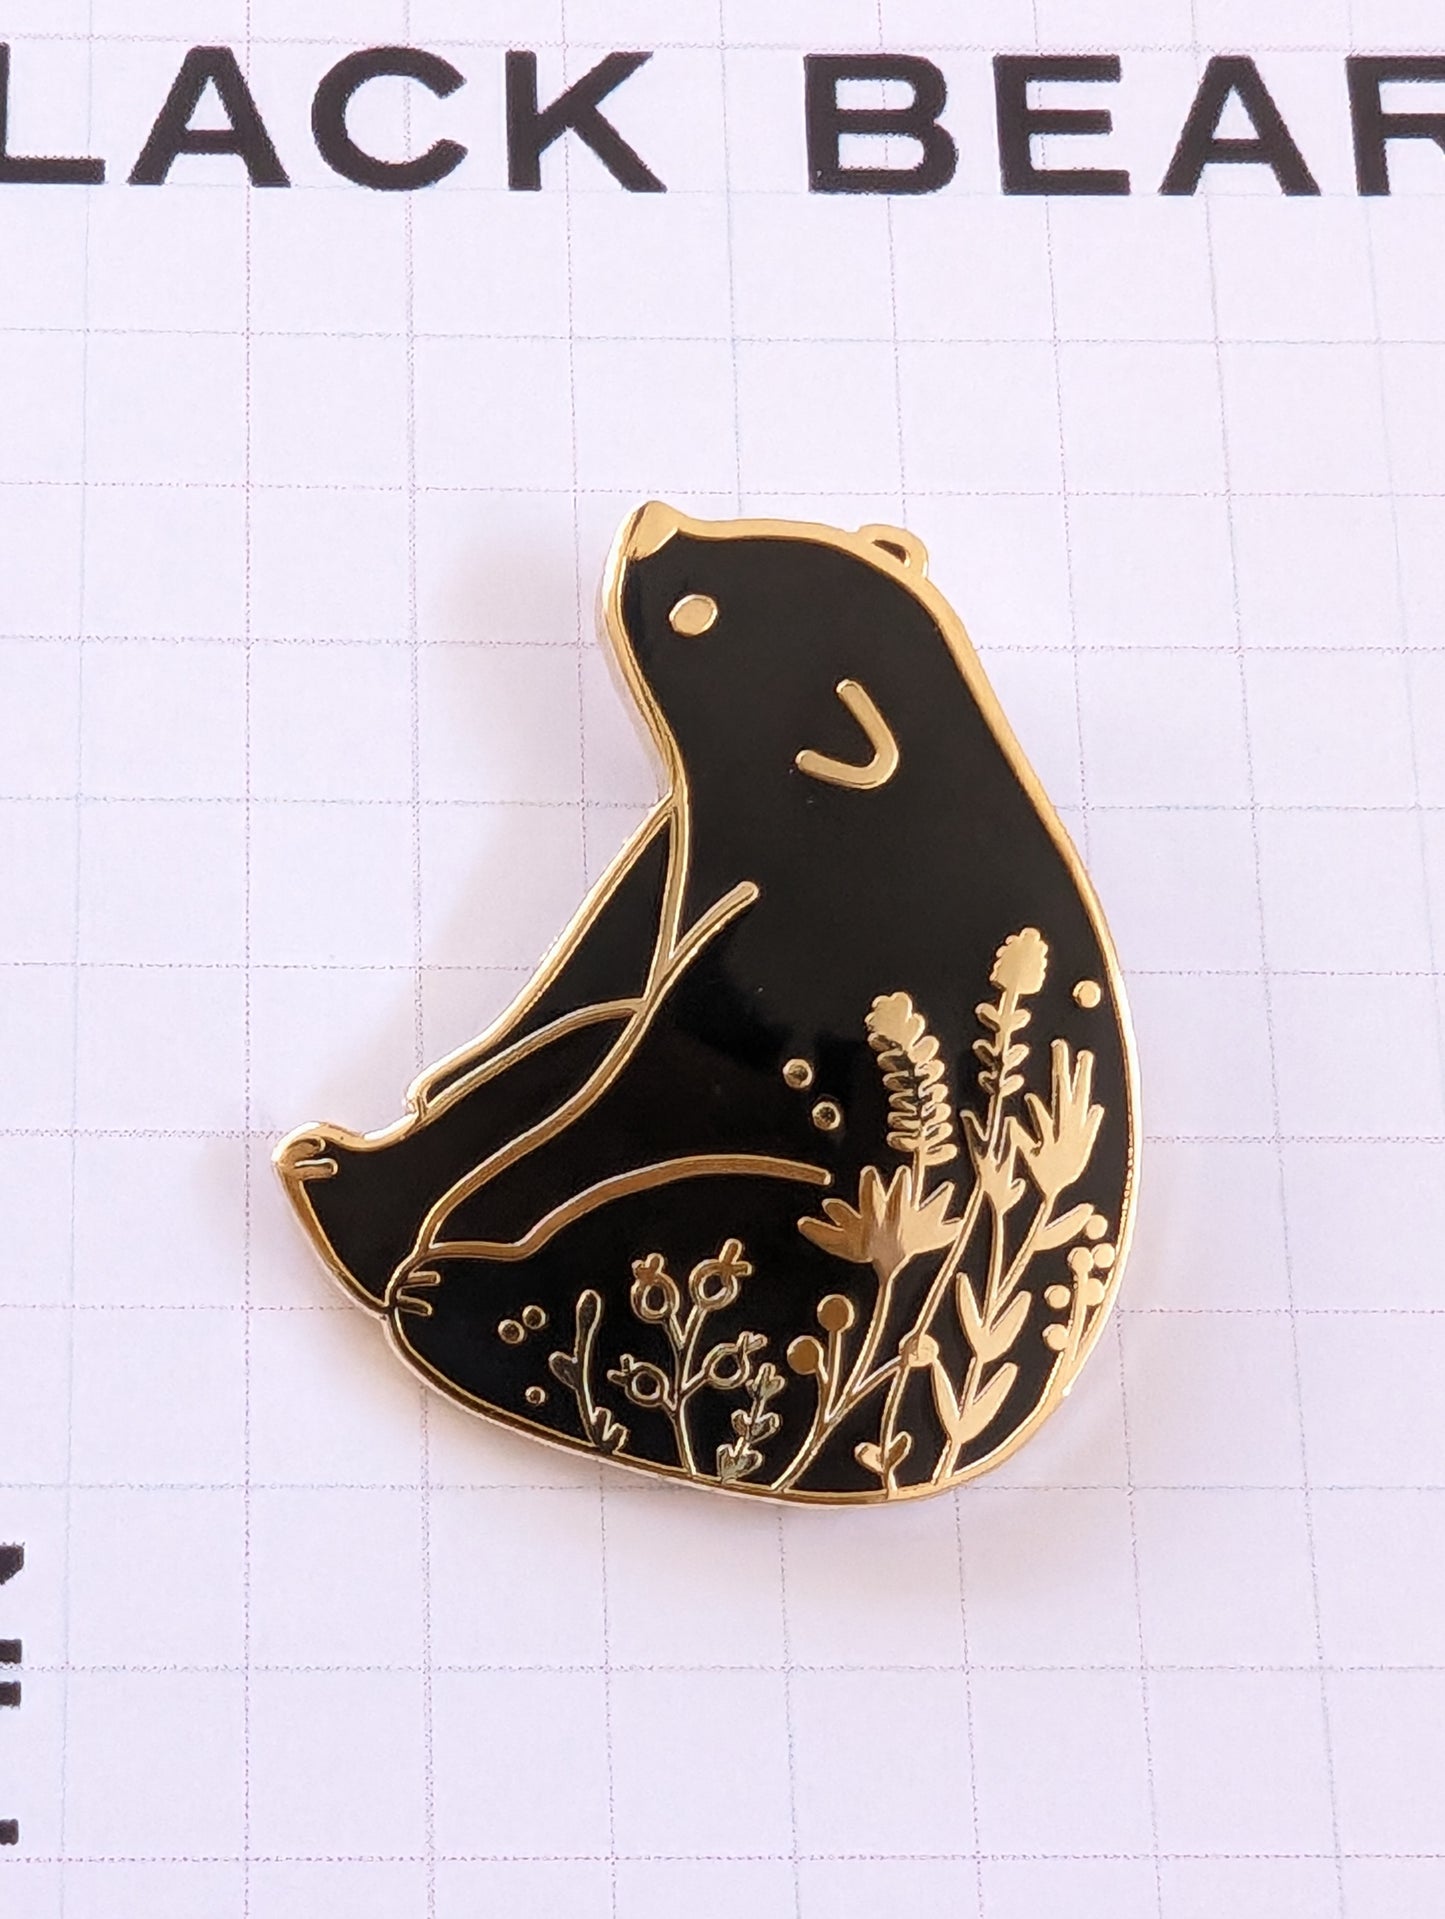 Black Bear enamel pin close-up